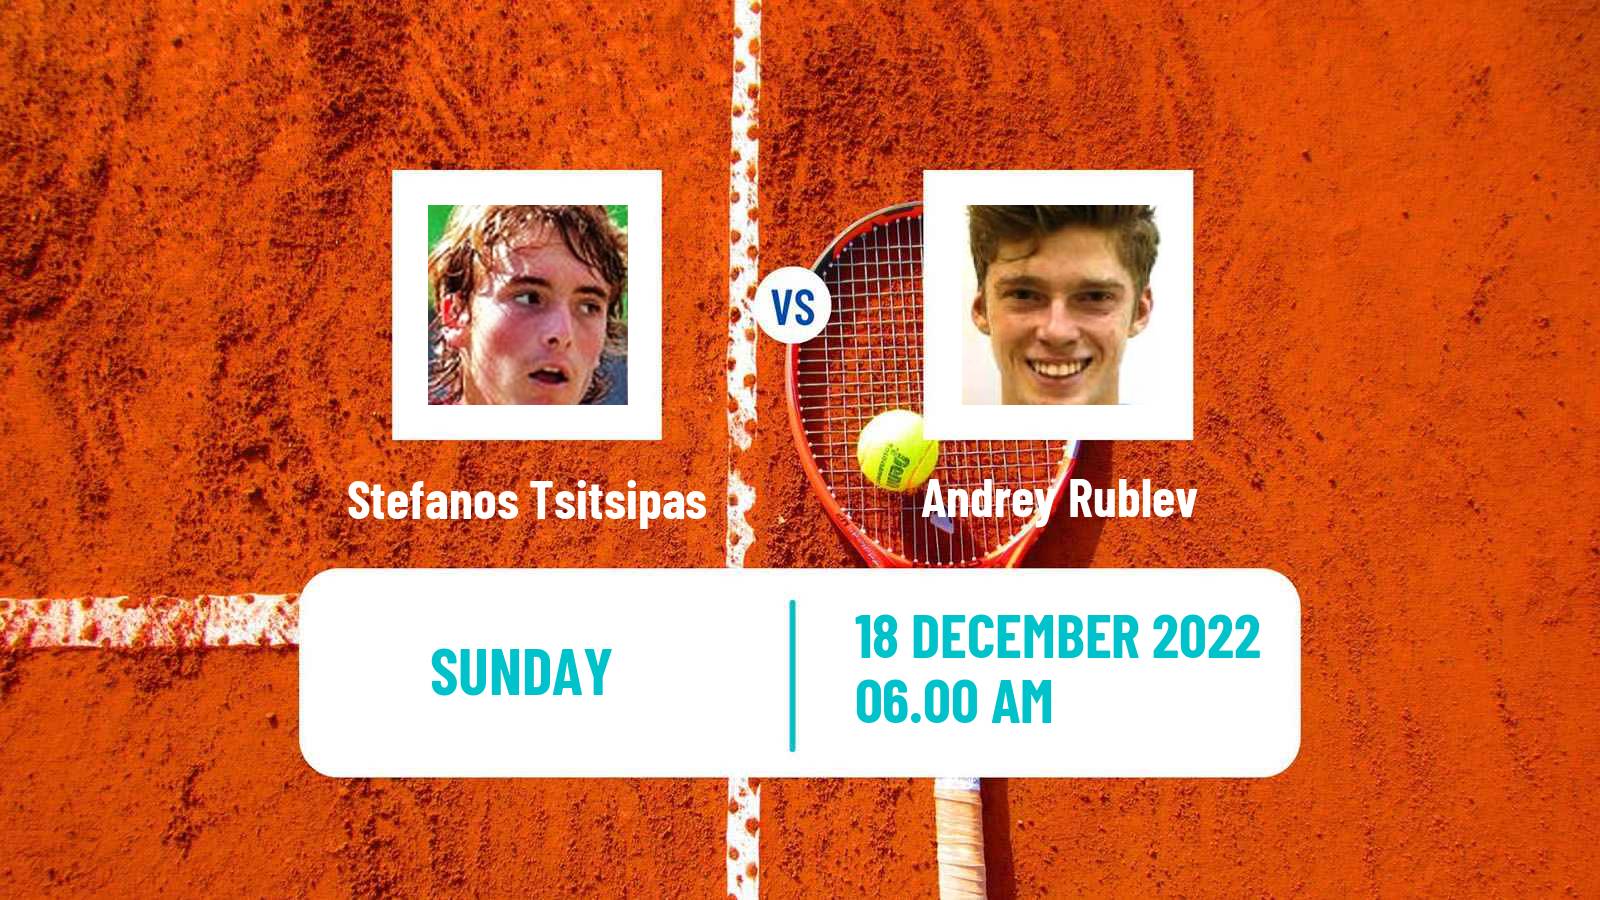 Tennis Exhibition World Tennis Championship Stefanos Tsitsipas - Andrey Rublev